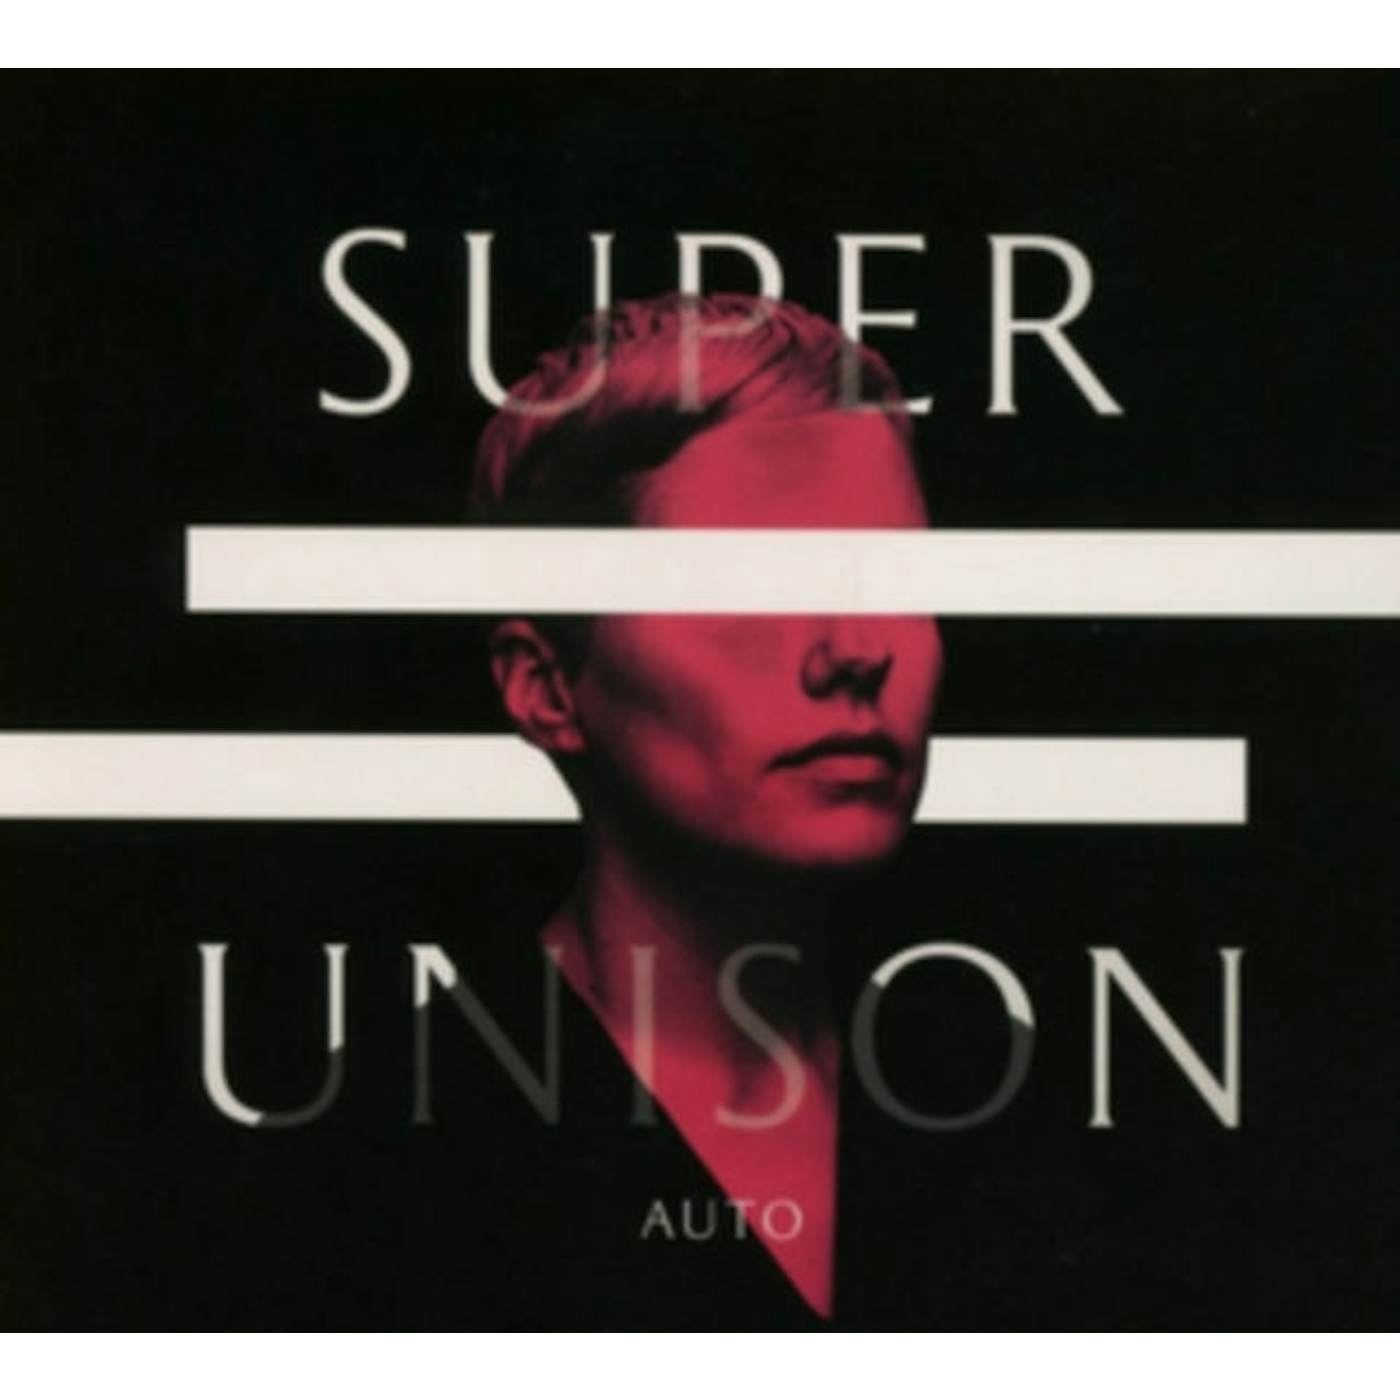 Super Unison LP - Auto (Vinyl)